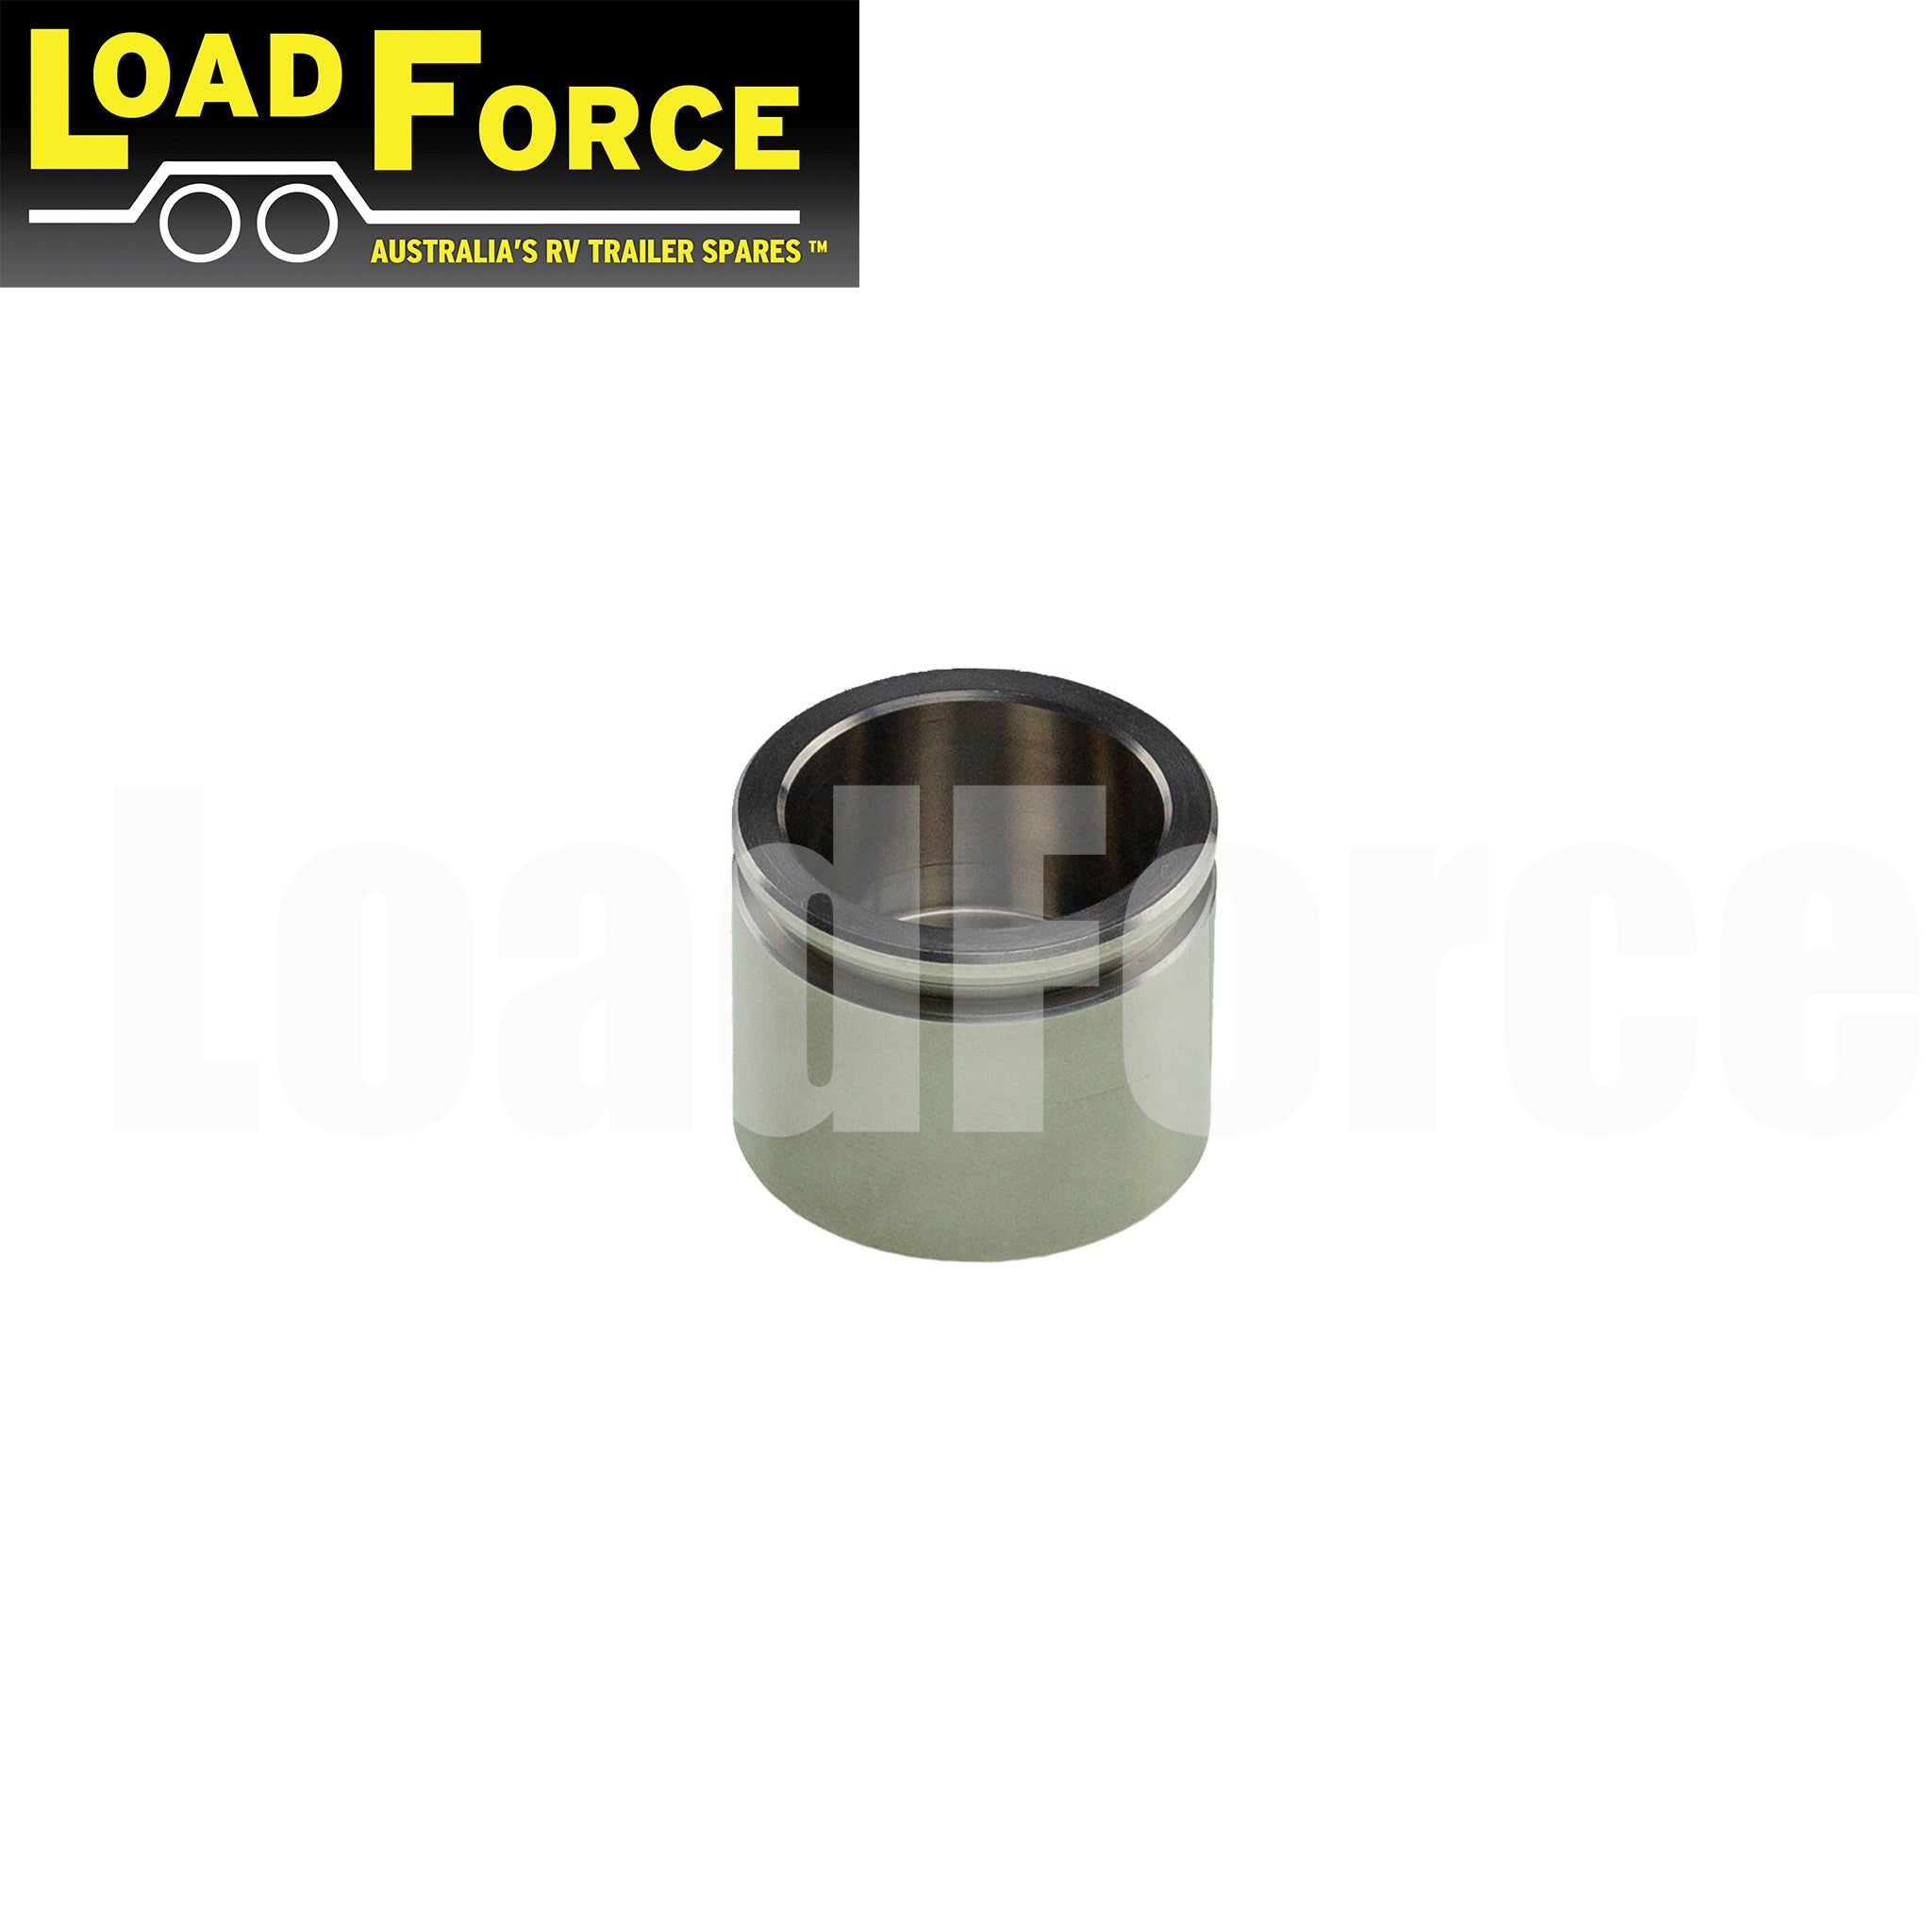 LoadForce stainless steel caliper piston for TA400, TA300, Al-Ko, Meher and Trojan hydraulic caliper